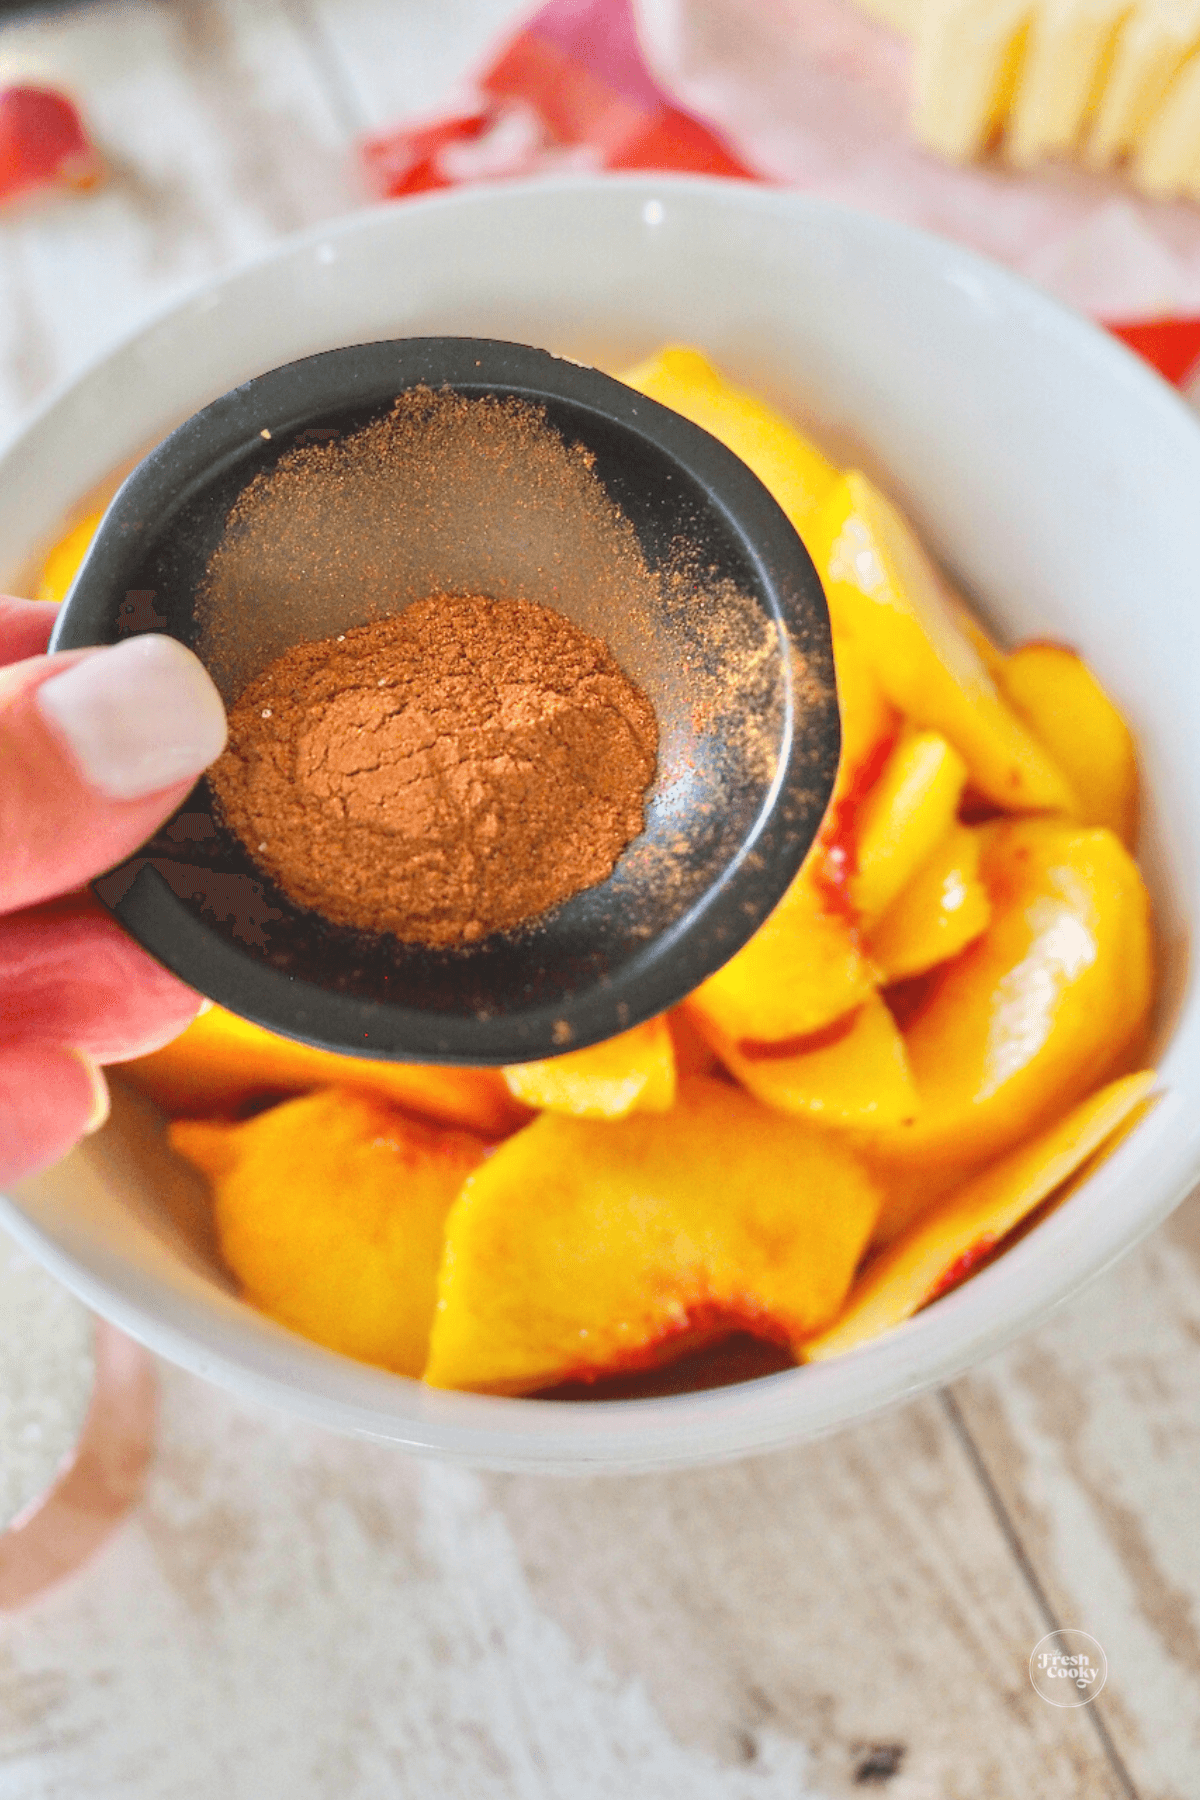 Adding cinnamon to peaches.